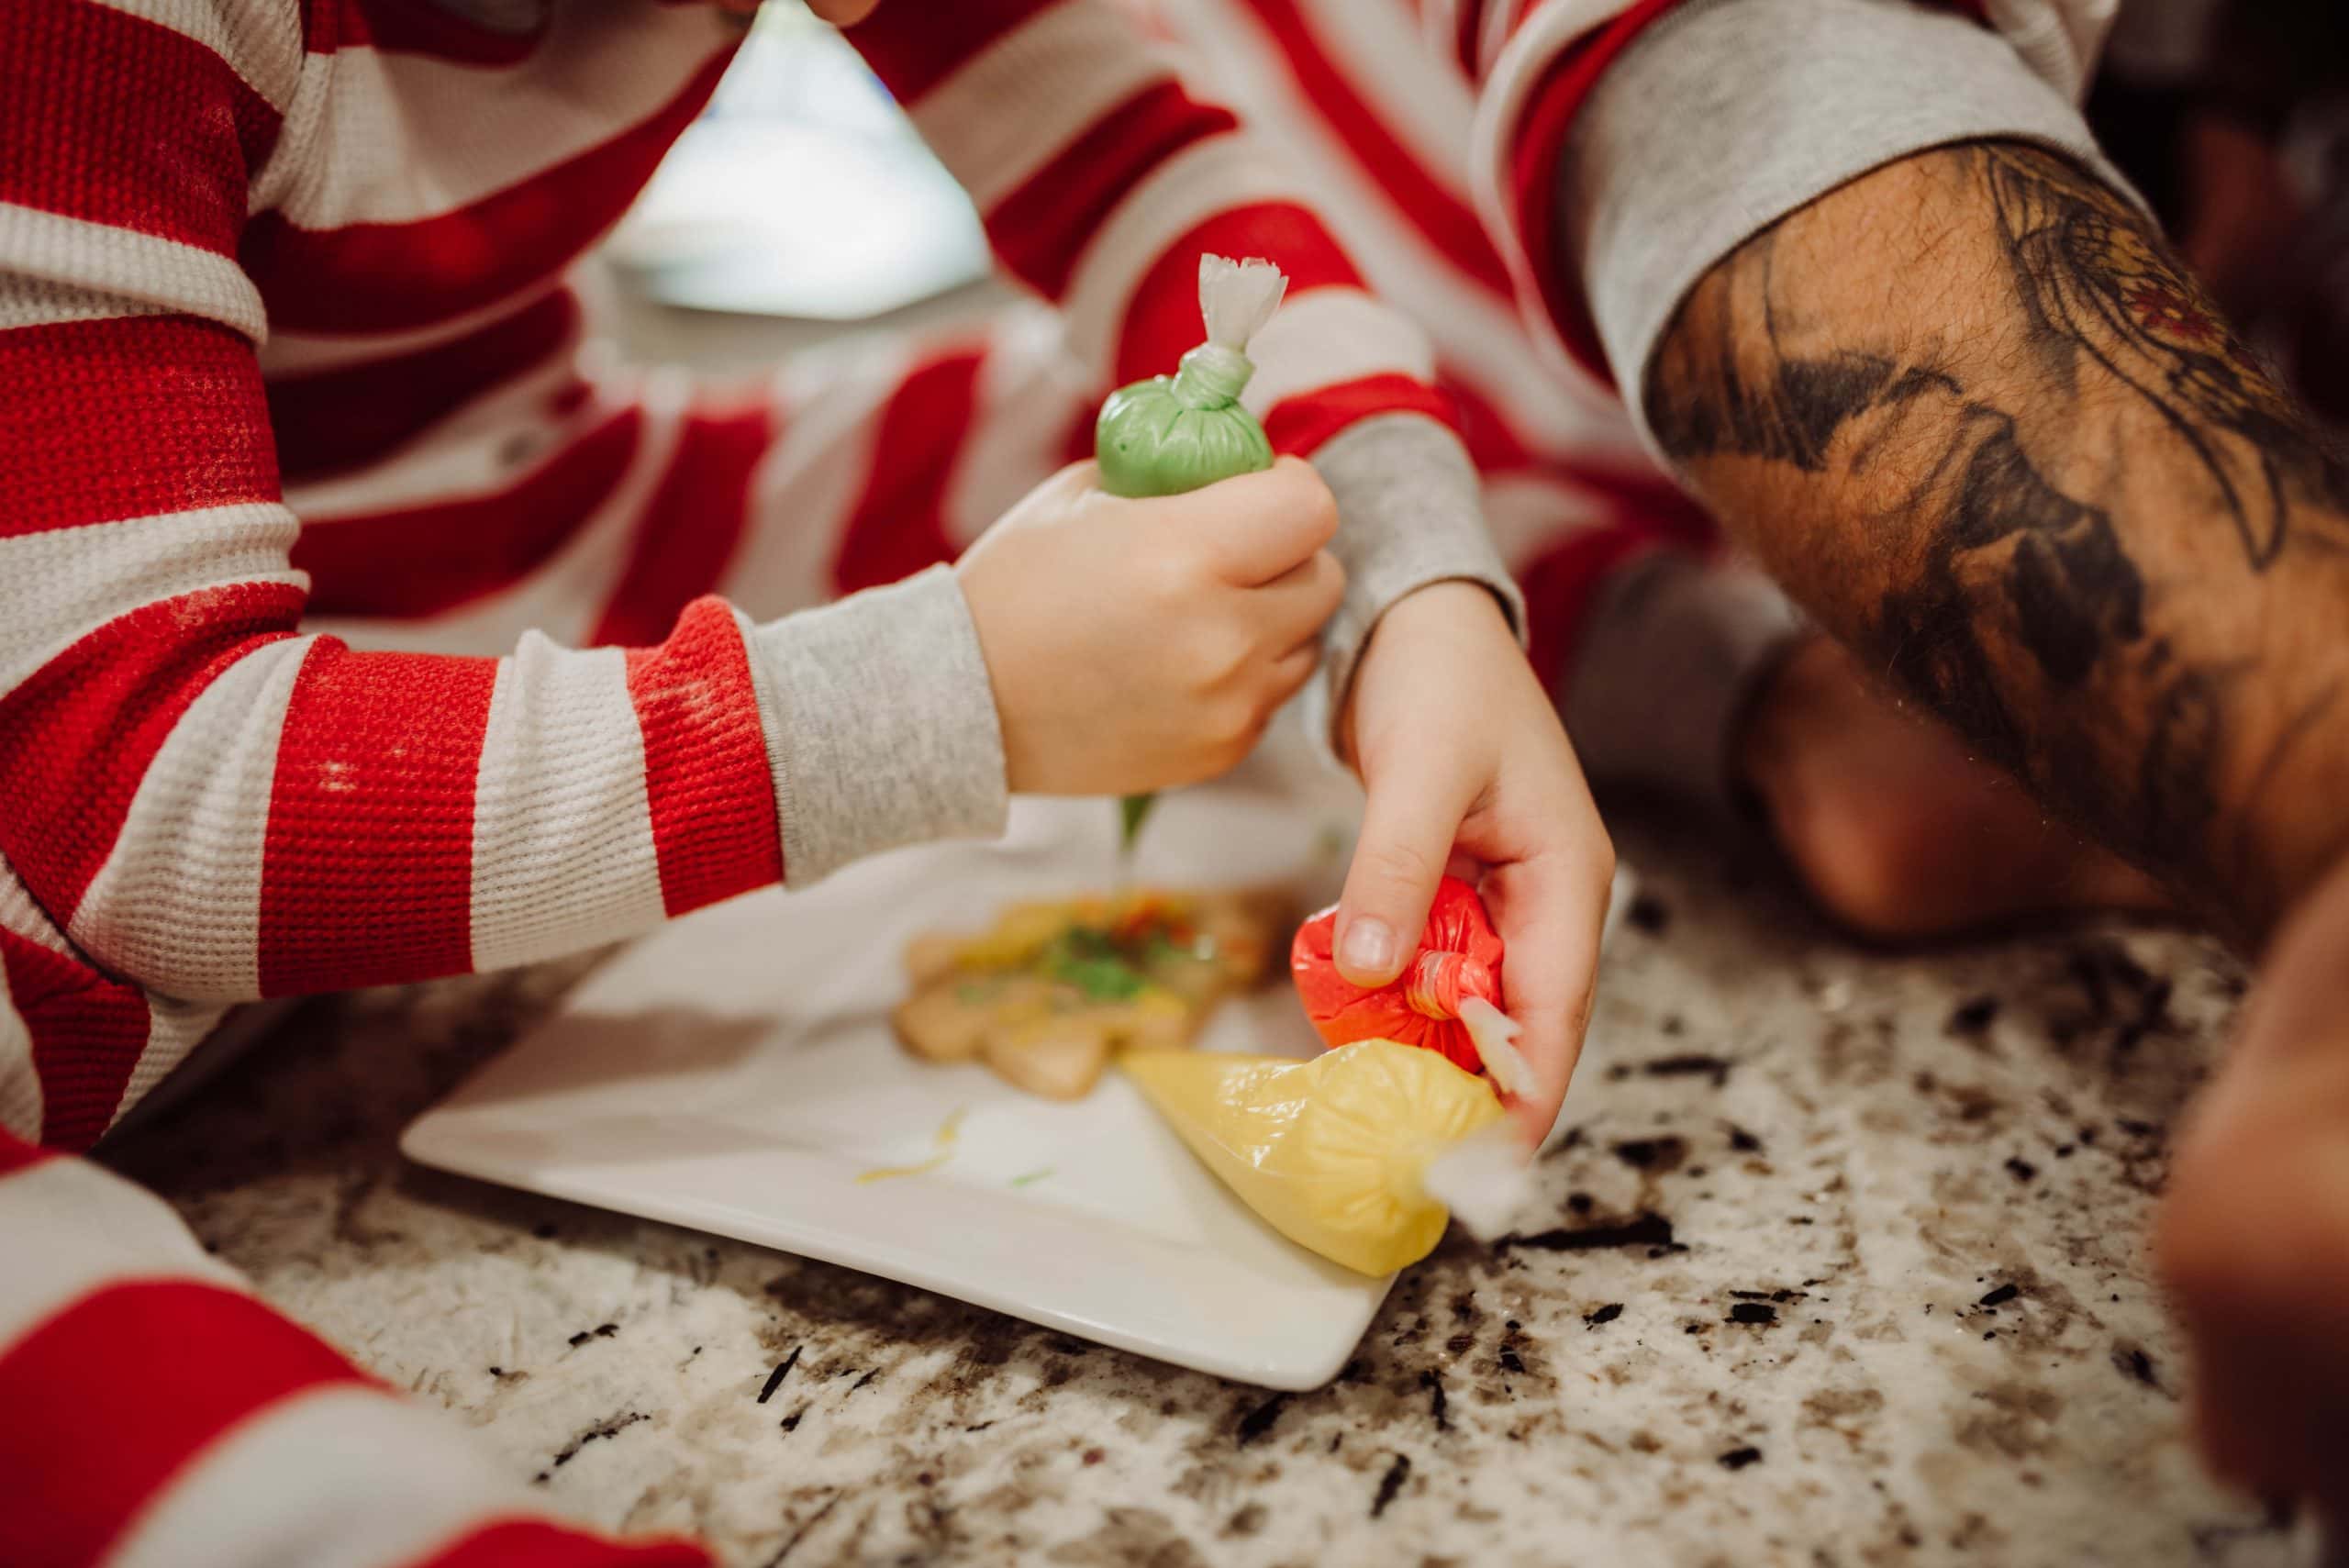 The Yarringtons- Merry Cookie Making! | Families, Lifestyle - Jennifer Duke Photography